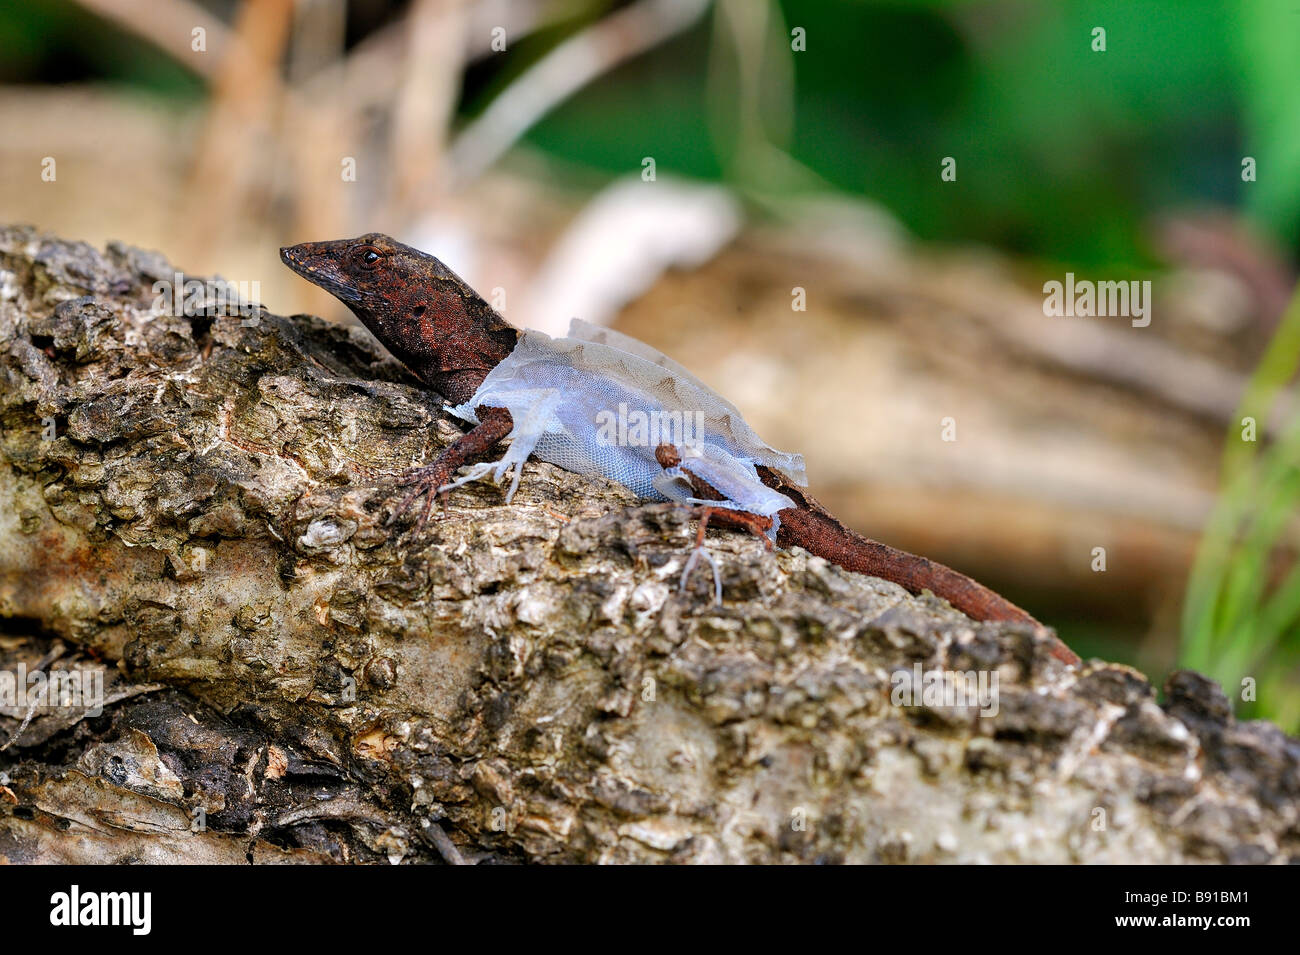 A lizard shedding its skin. Stock Photo